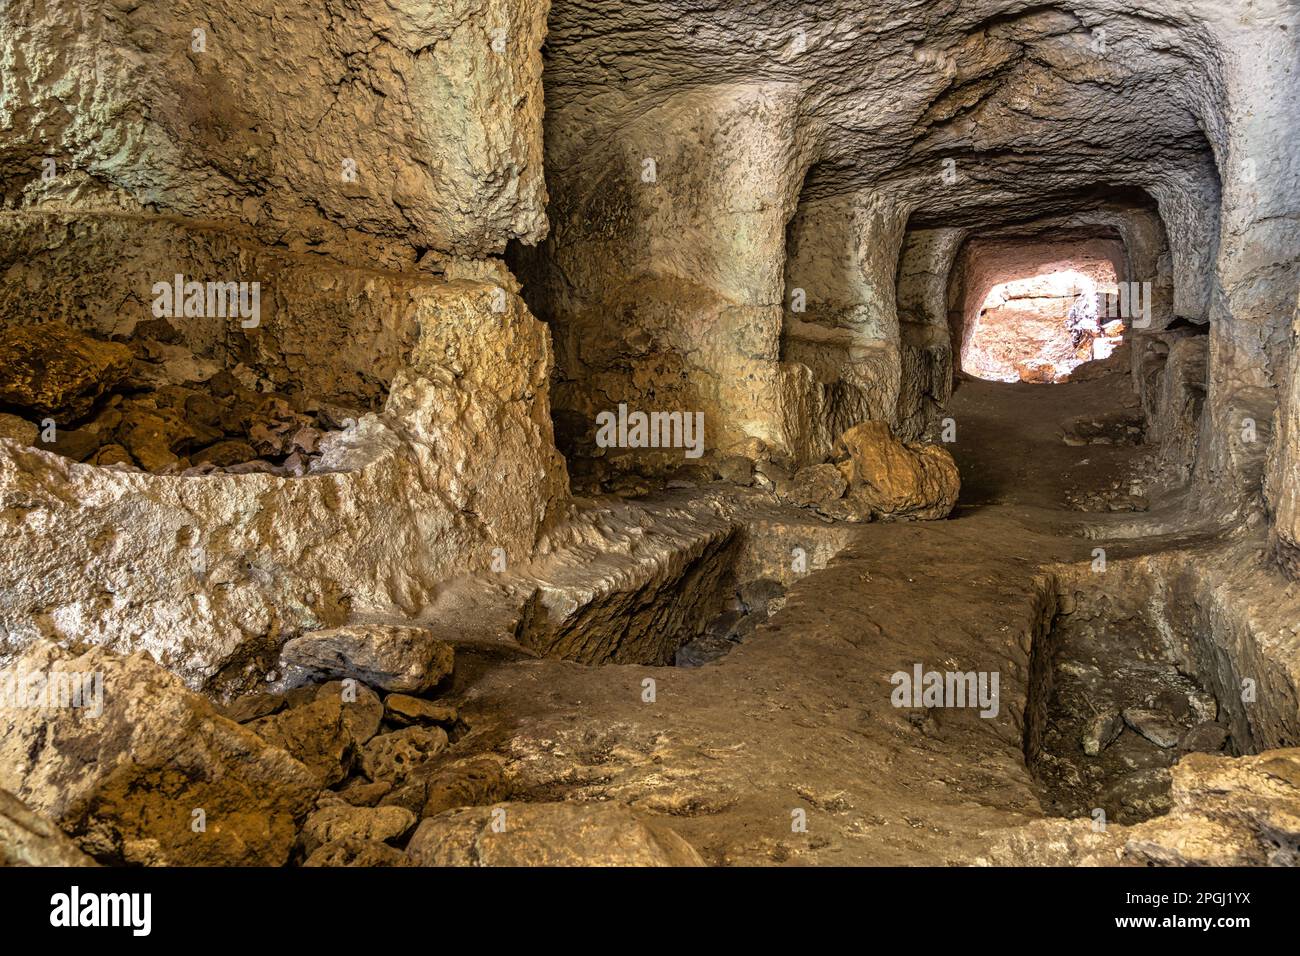 Catacombs of the Maccari Citadel in the Vendicari nature reserve. Syracuse, Sicily, Italy, Europe Stock Photo